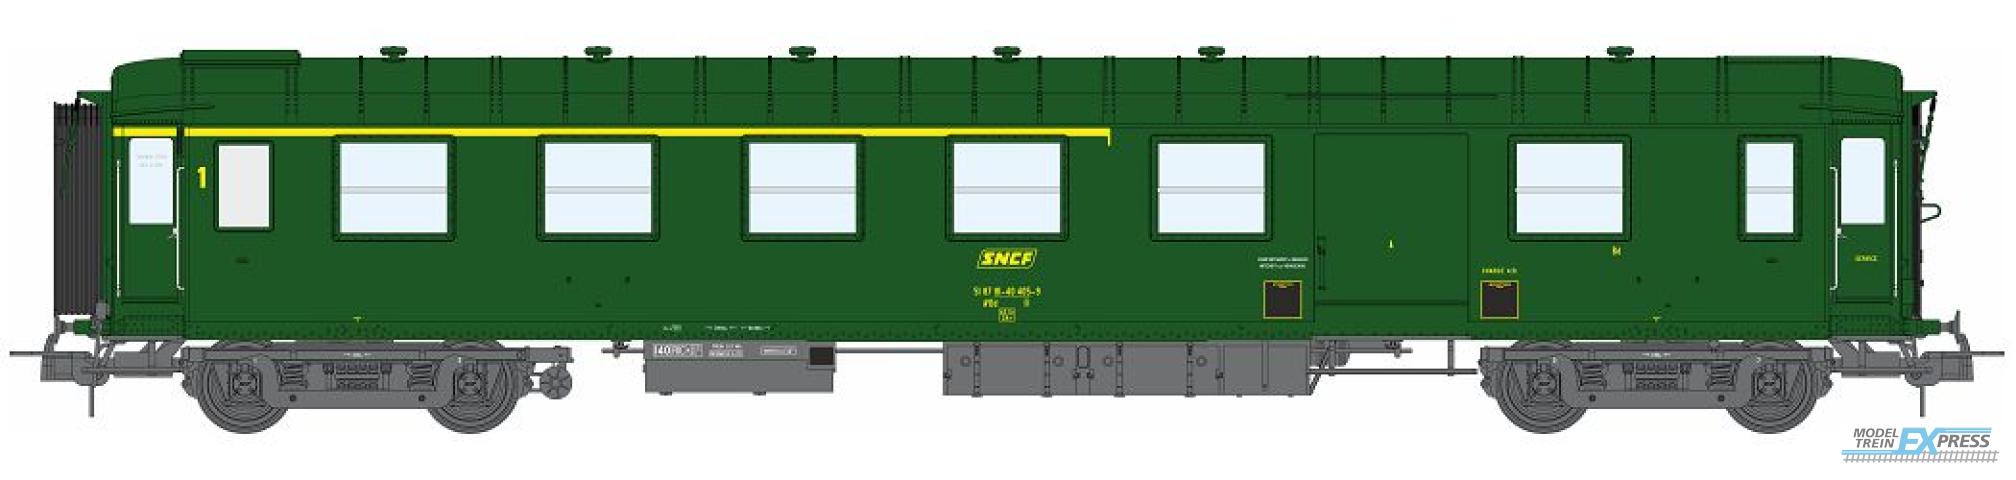 REE models VB-462 Metallic Cars Ex-PLM, A4D N°51 87 81-40 405-9, end of convoy lights, Green 301, SNCF Era IV - Functional Lights